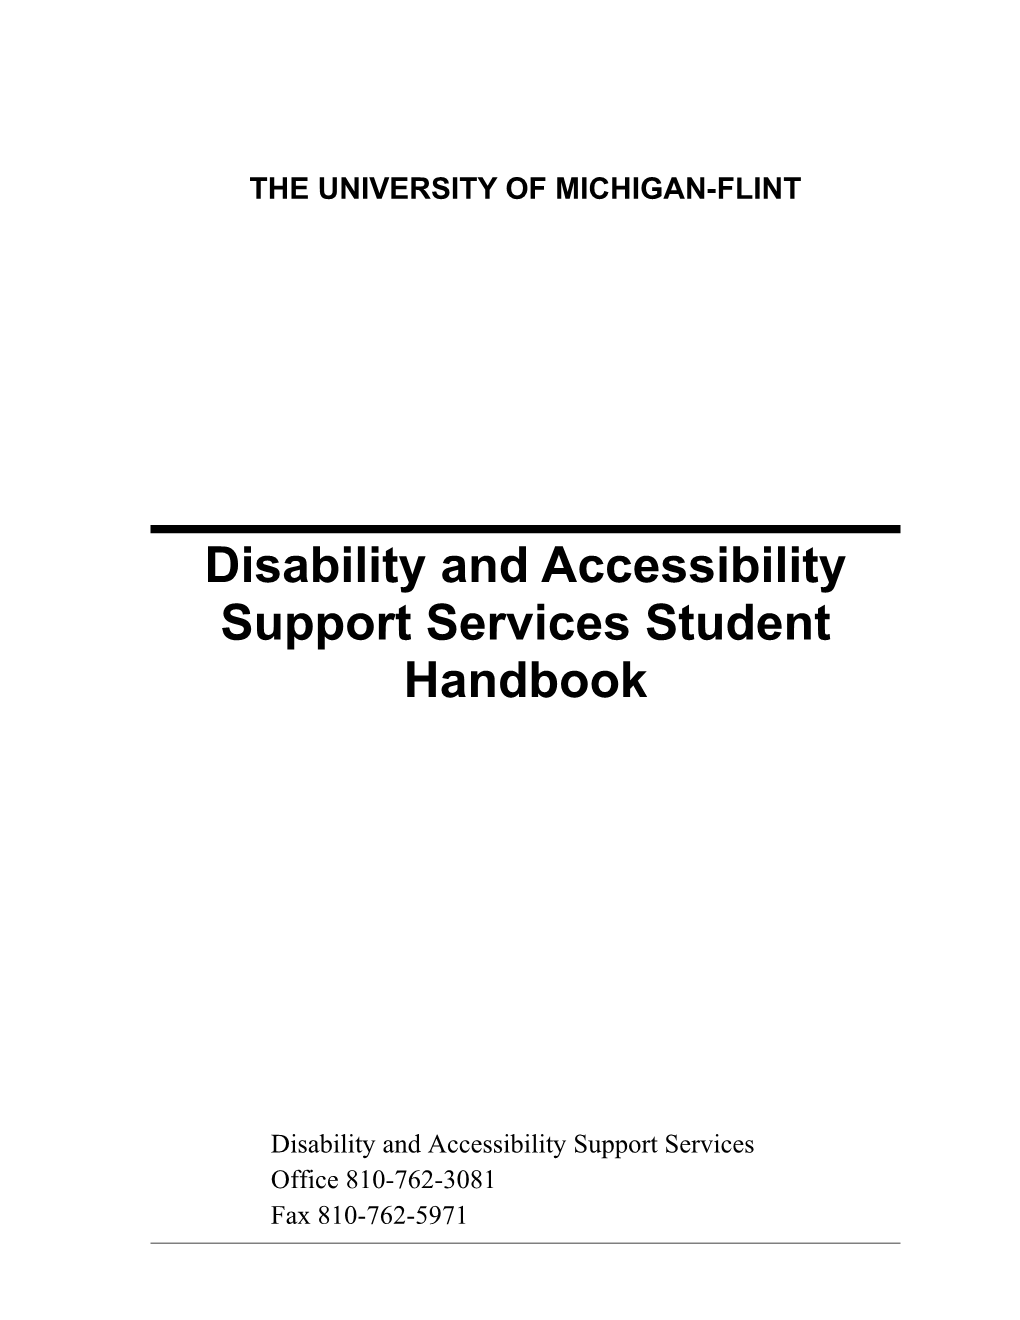 The University of Michigan-Flint s2